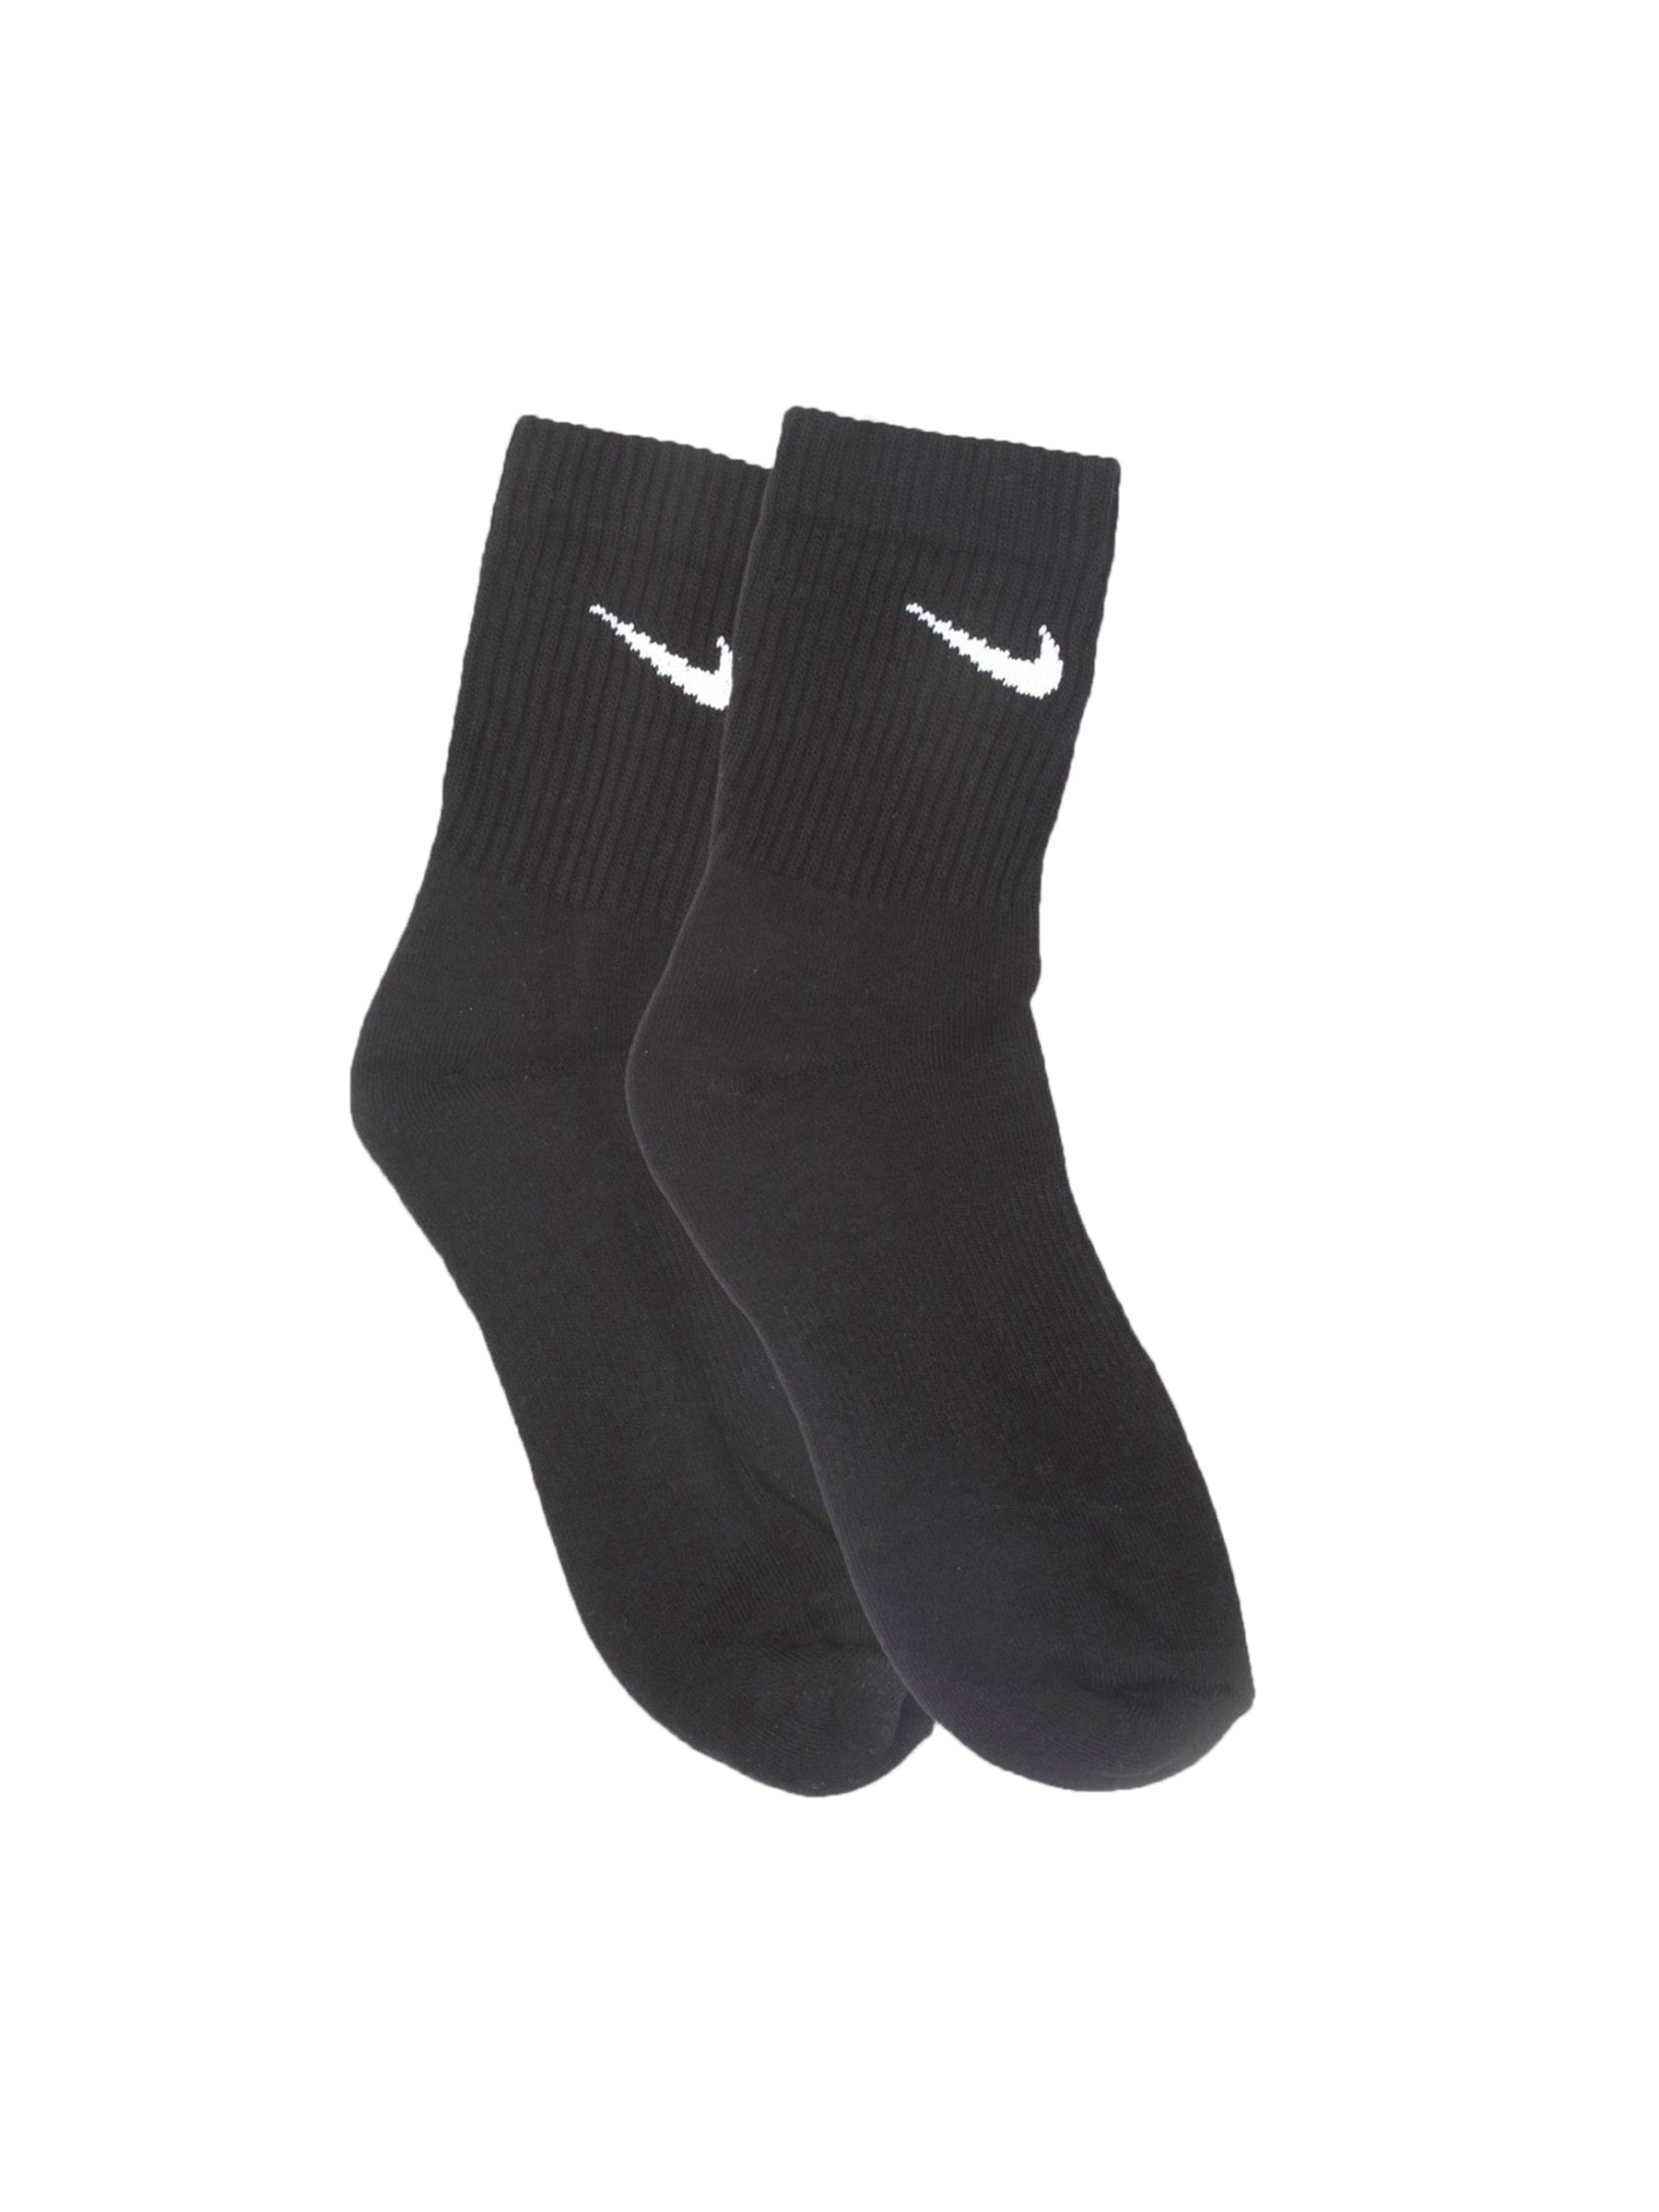 Nike Men's New Ap Swsh C Black Socks